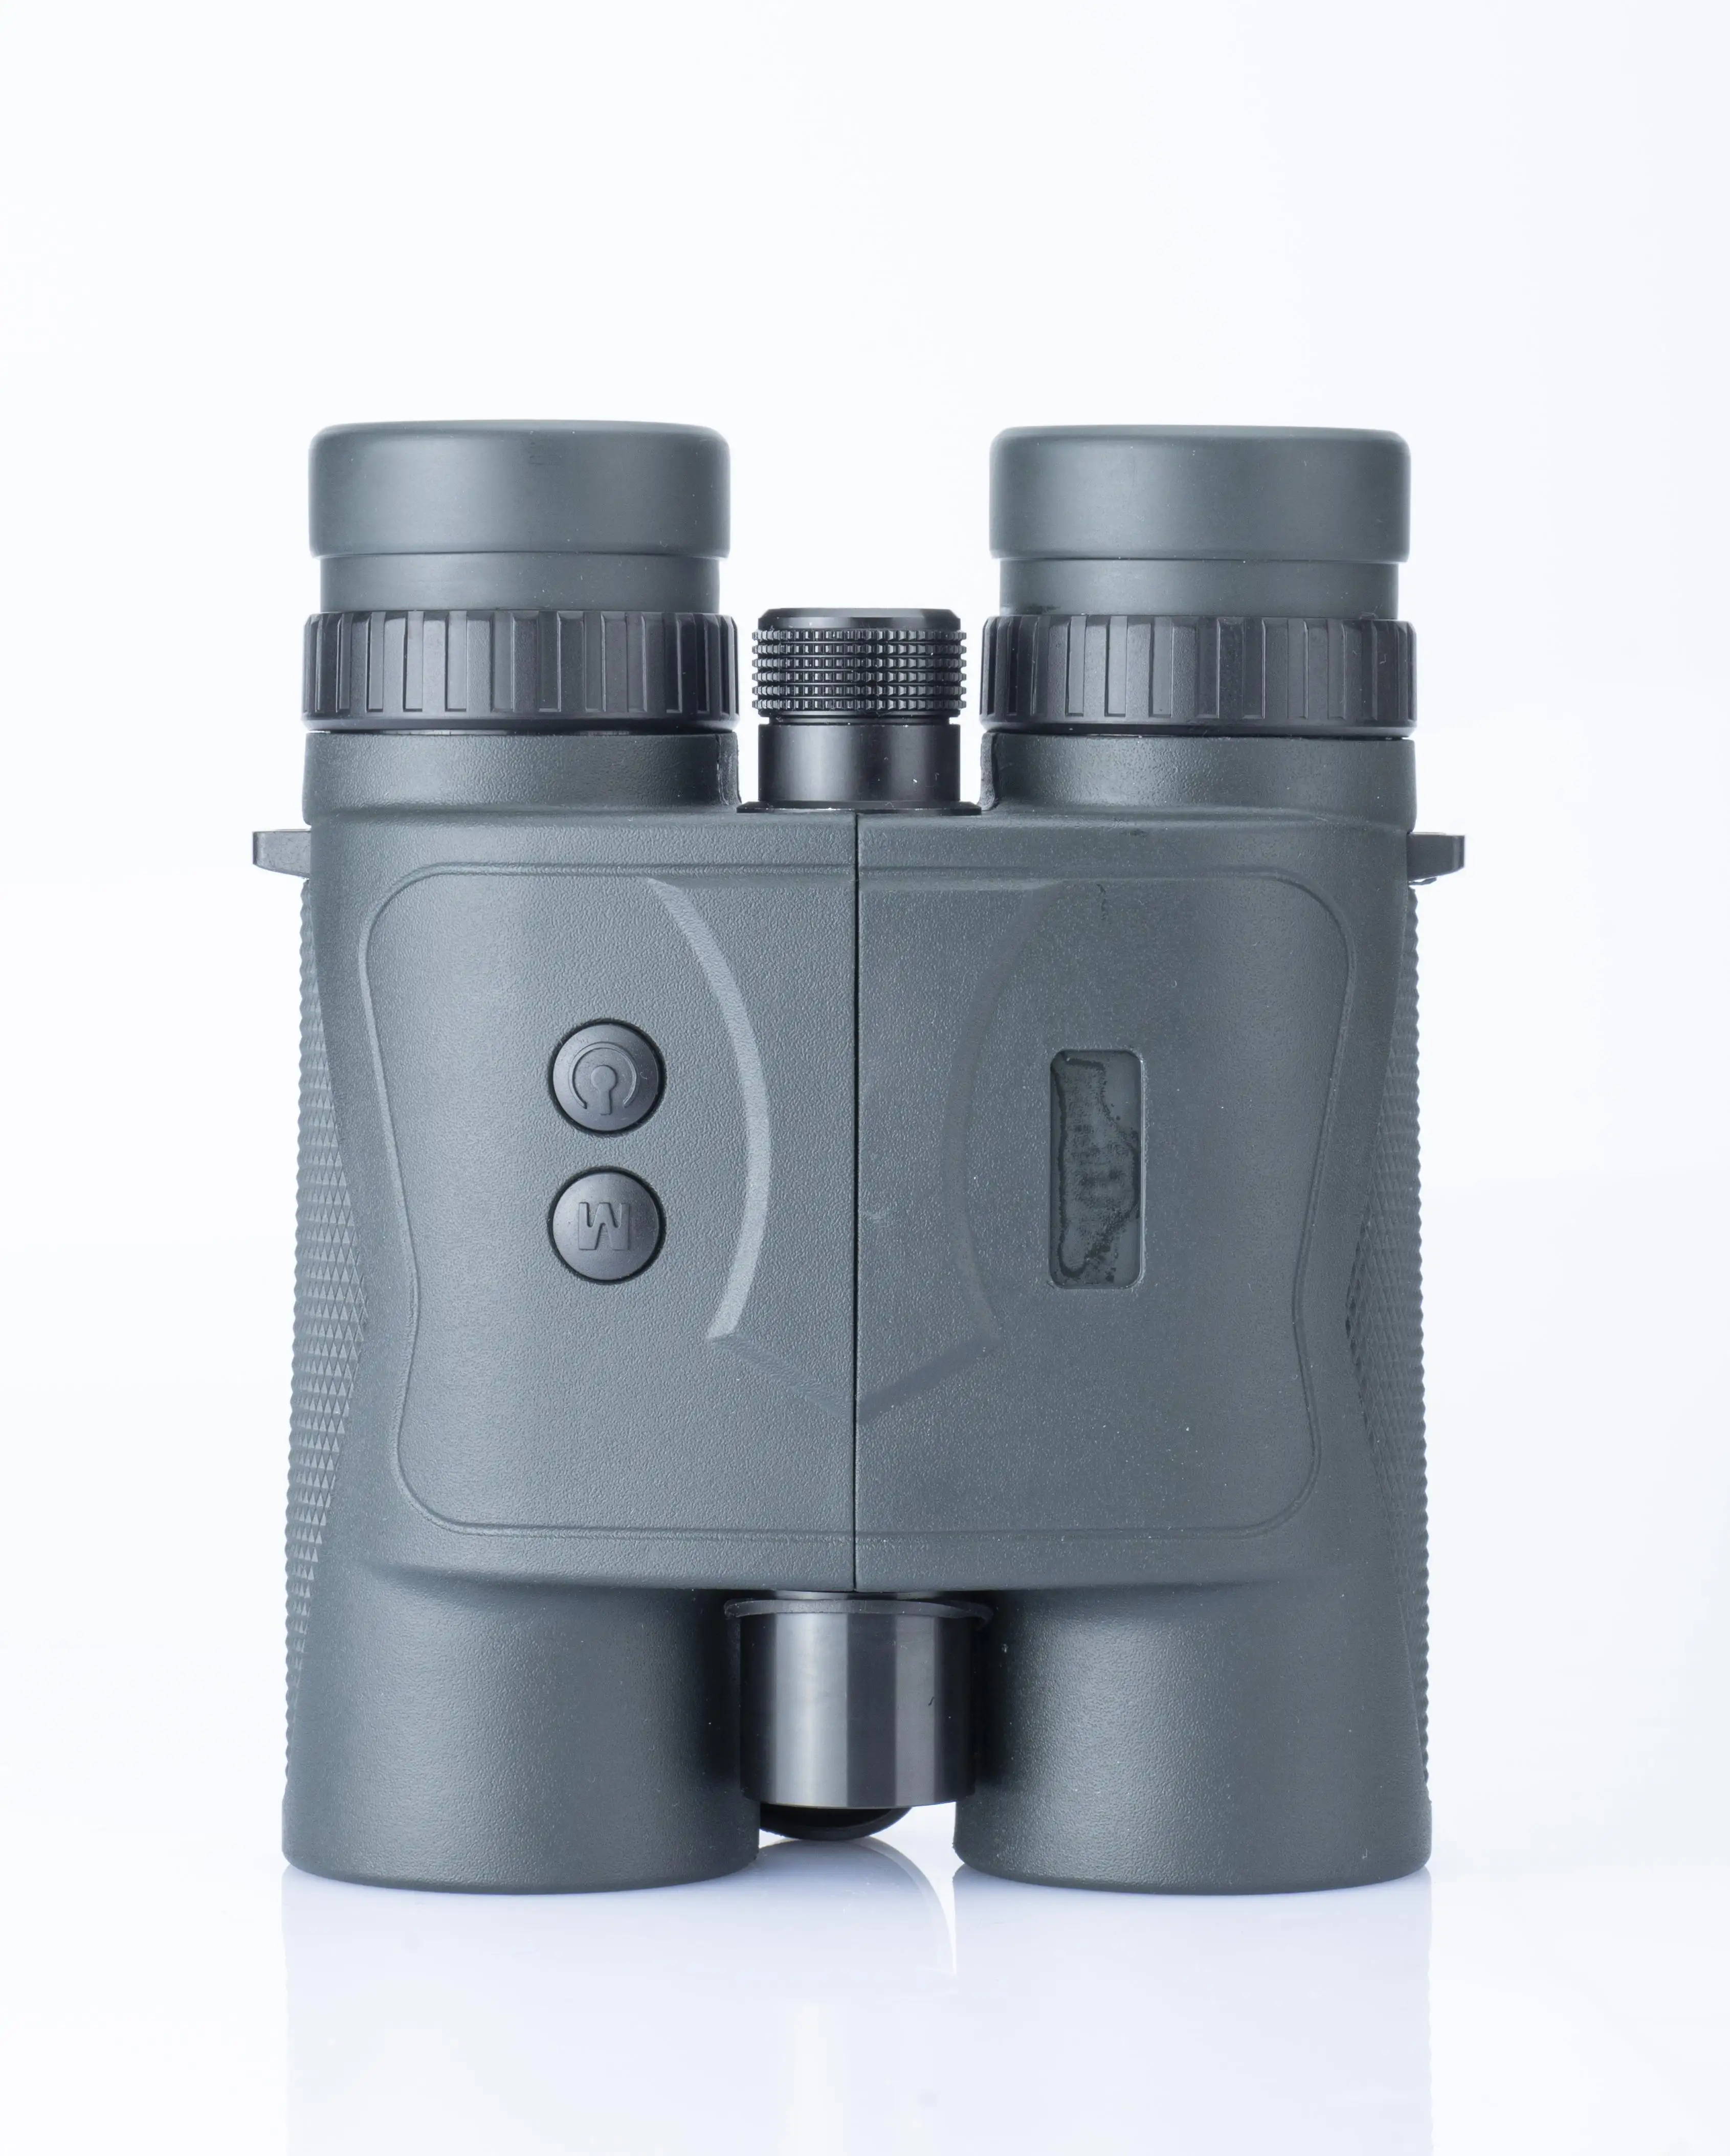 Tristar HD PDLC Screen 1500m Binocular Rangefinder Distance Laser Meter Range Finder Binoculars